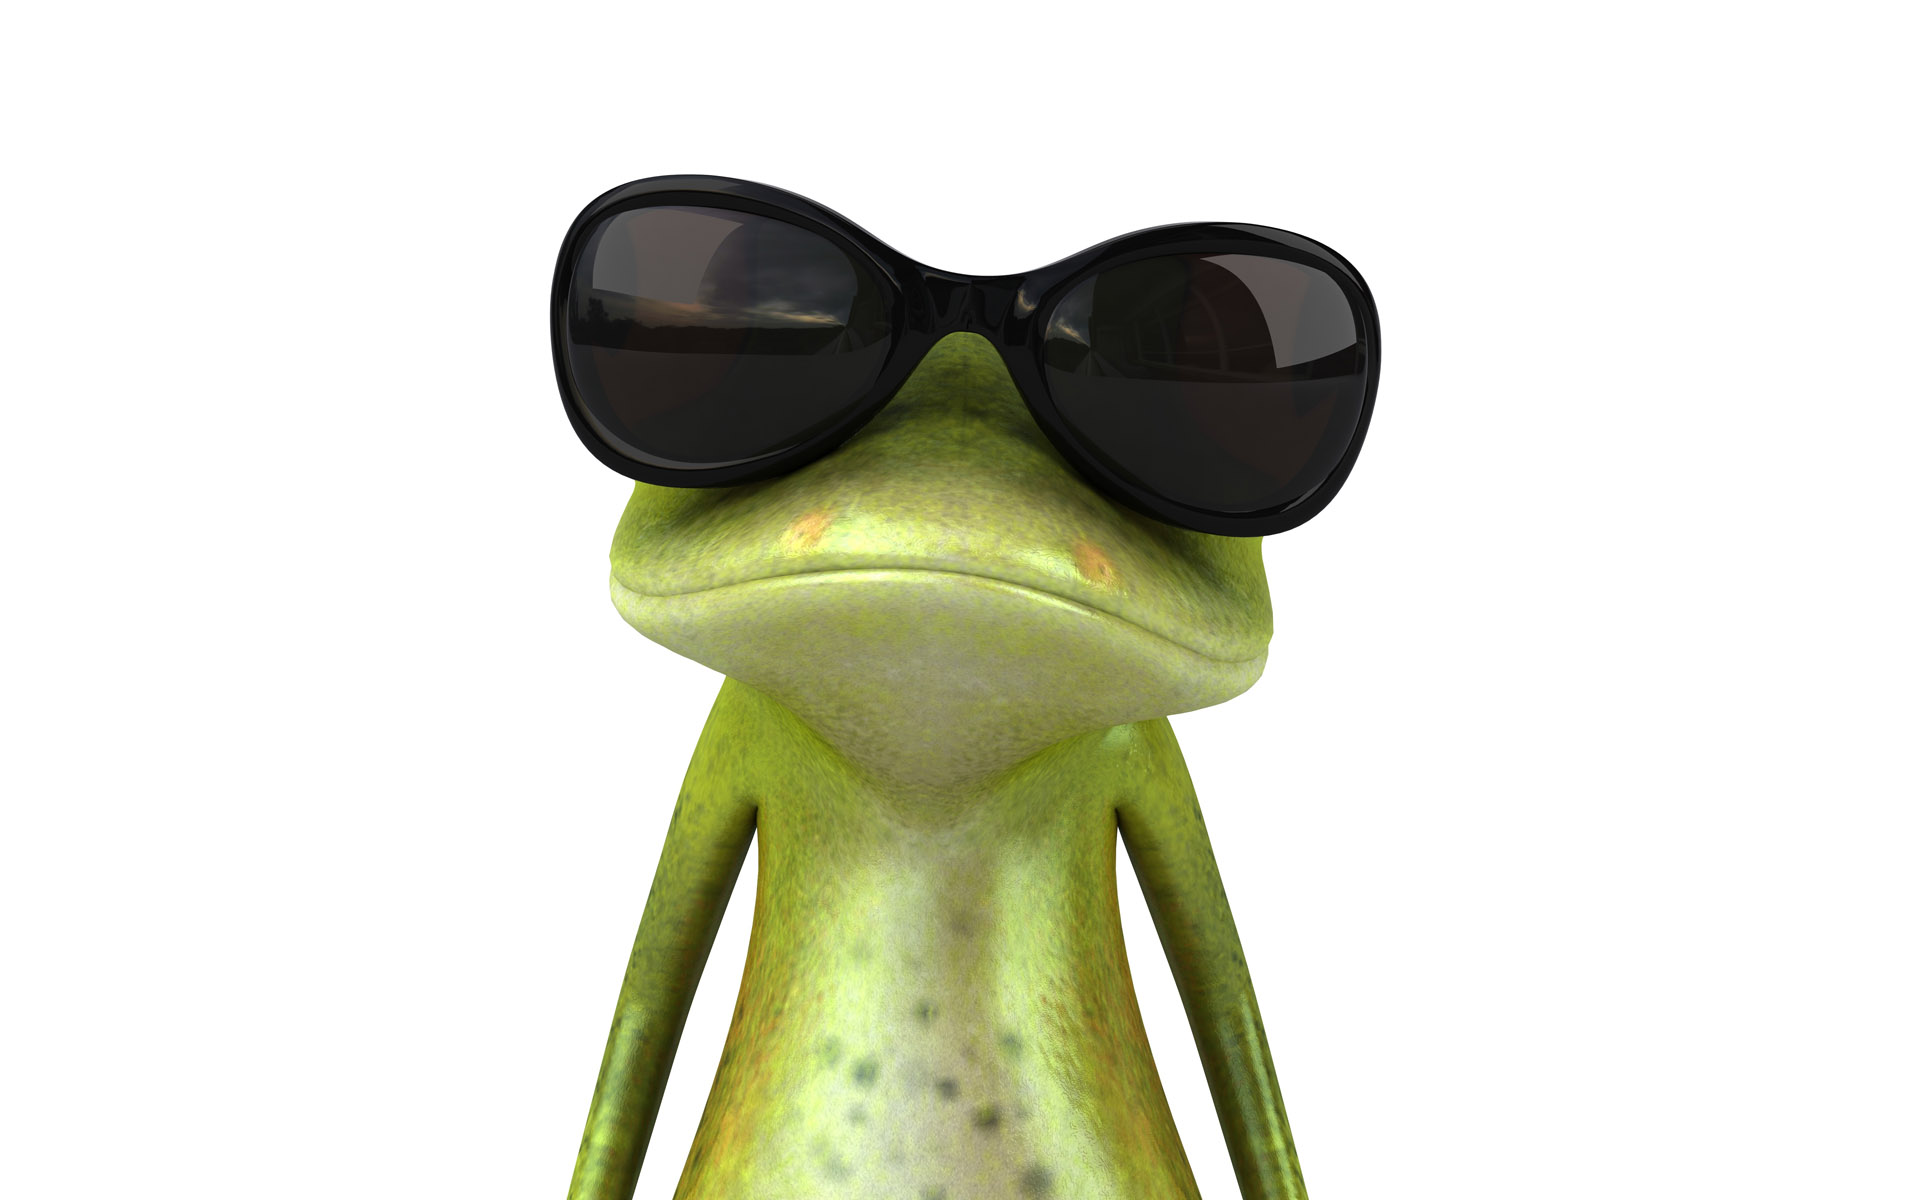 Frog 3d Wallpaper For Desktop Is A Great Your Puter